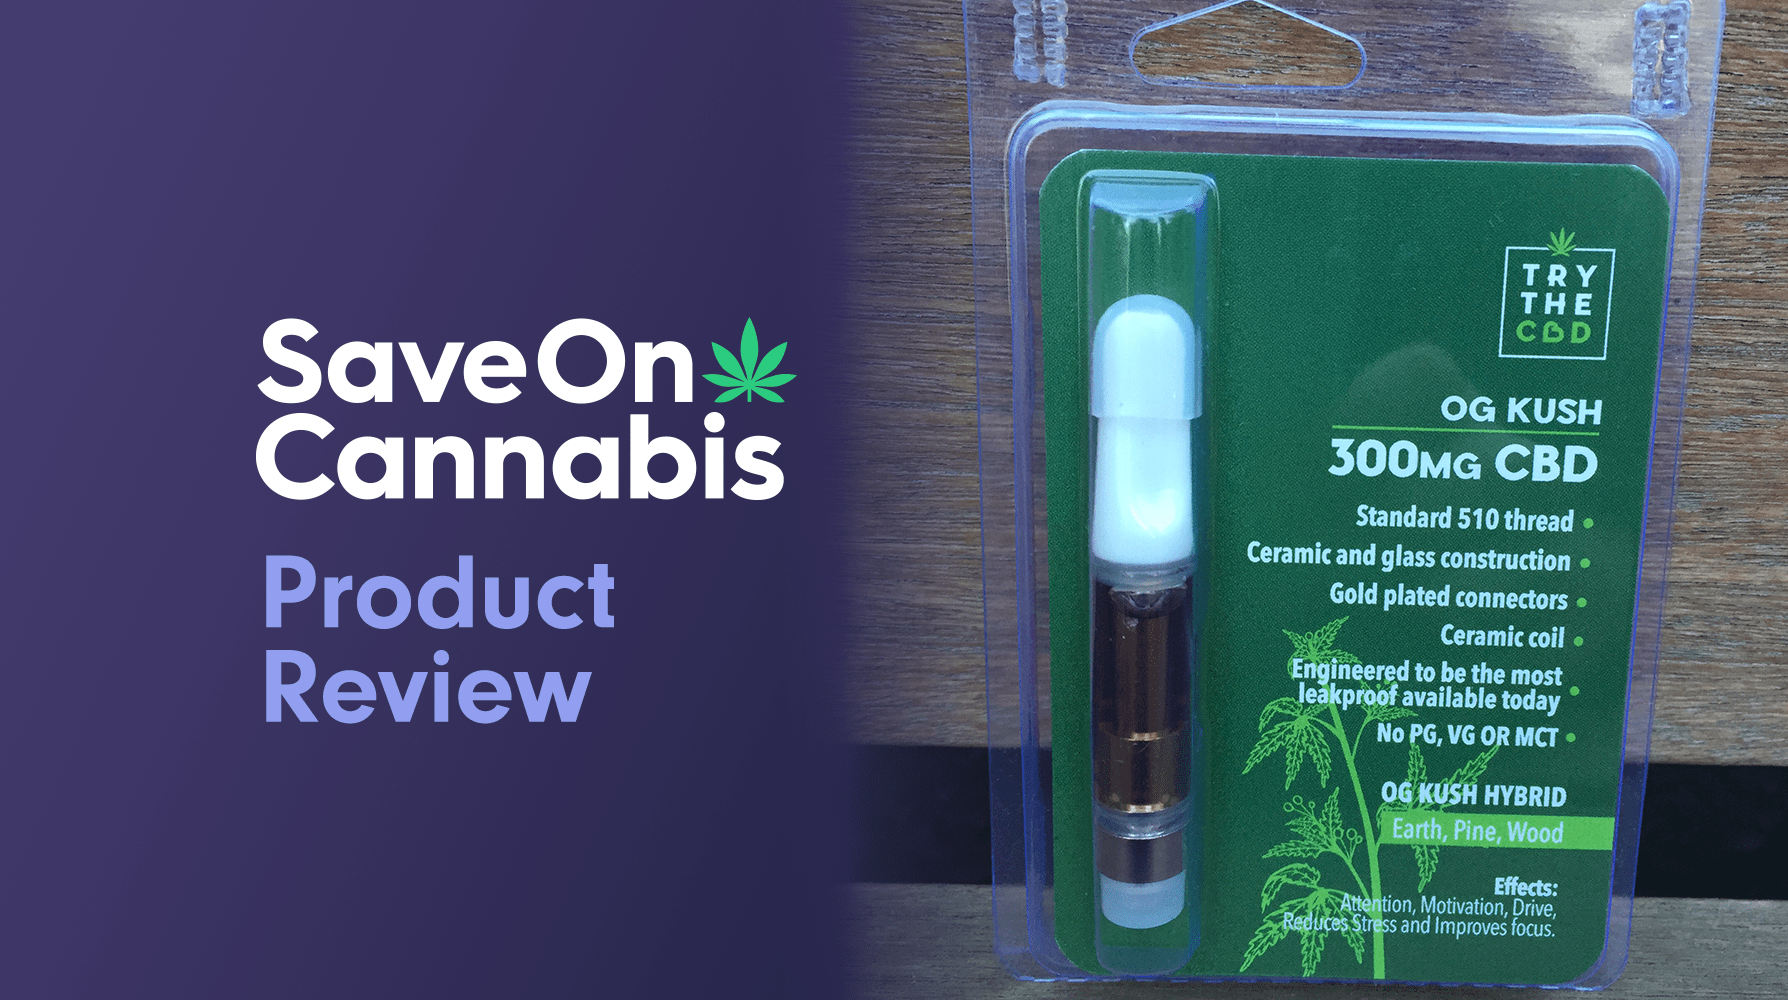 trythecbd og kush cbd vaporizer pen cartridge 300 mg review save on cannabis website